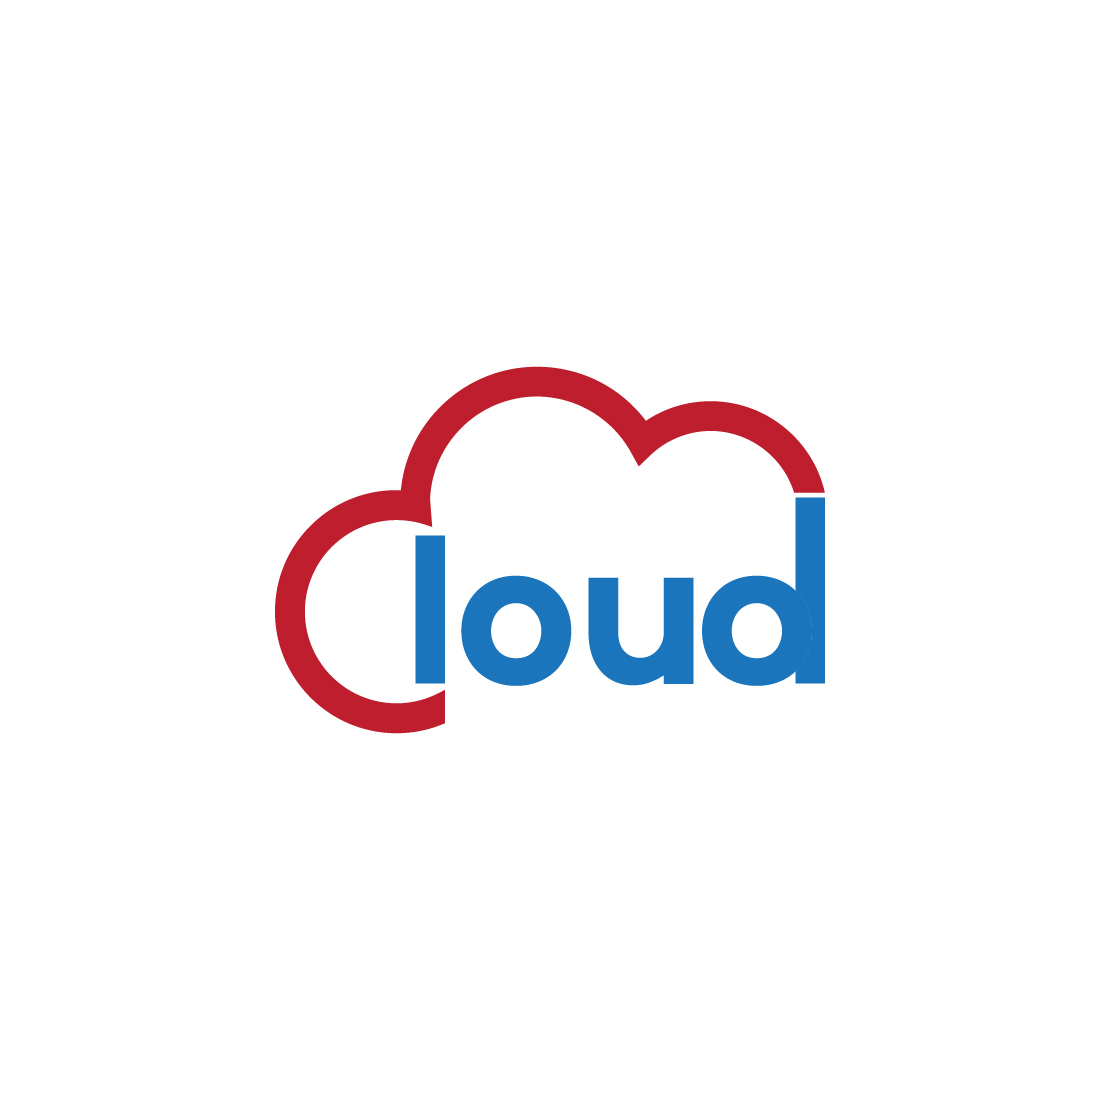 Cool Cloud Logo Design cover image.